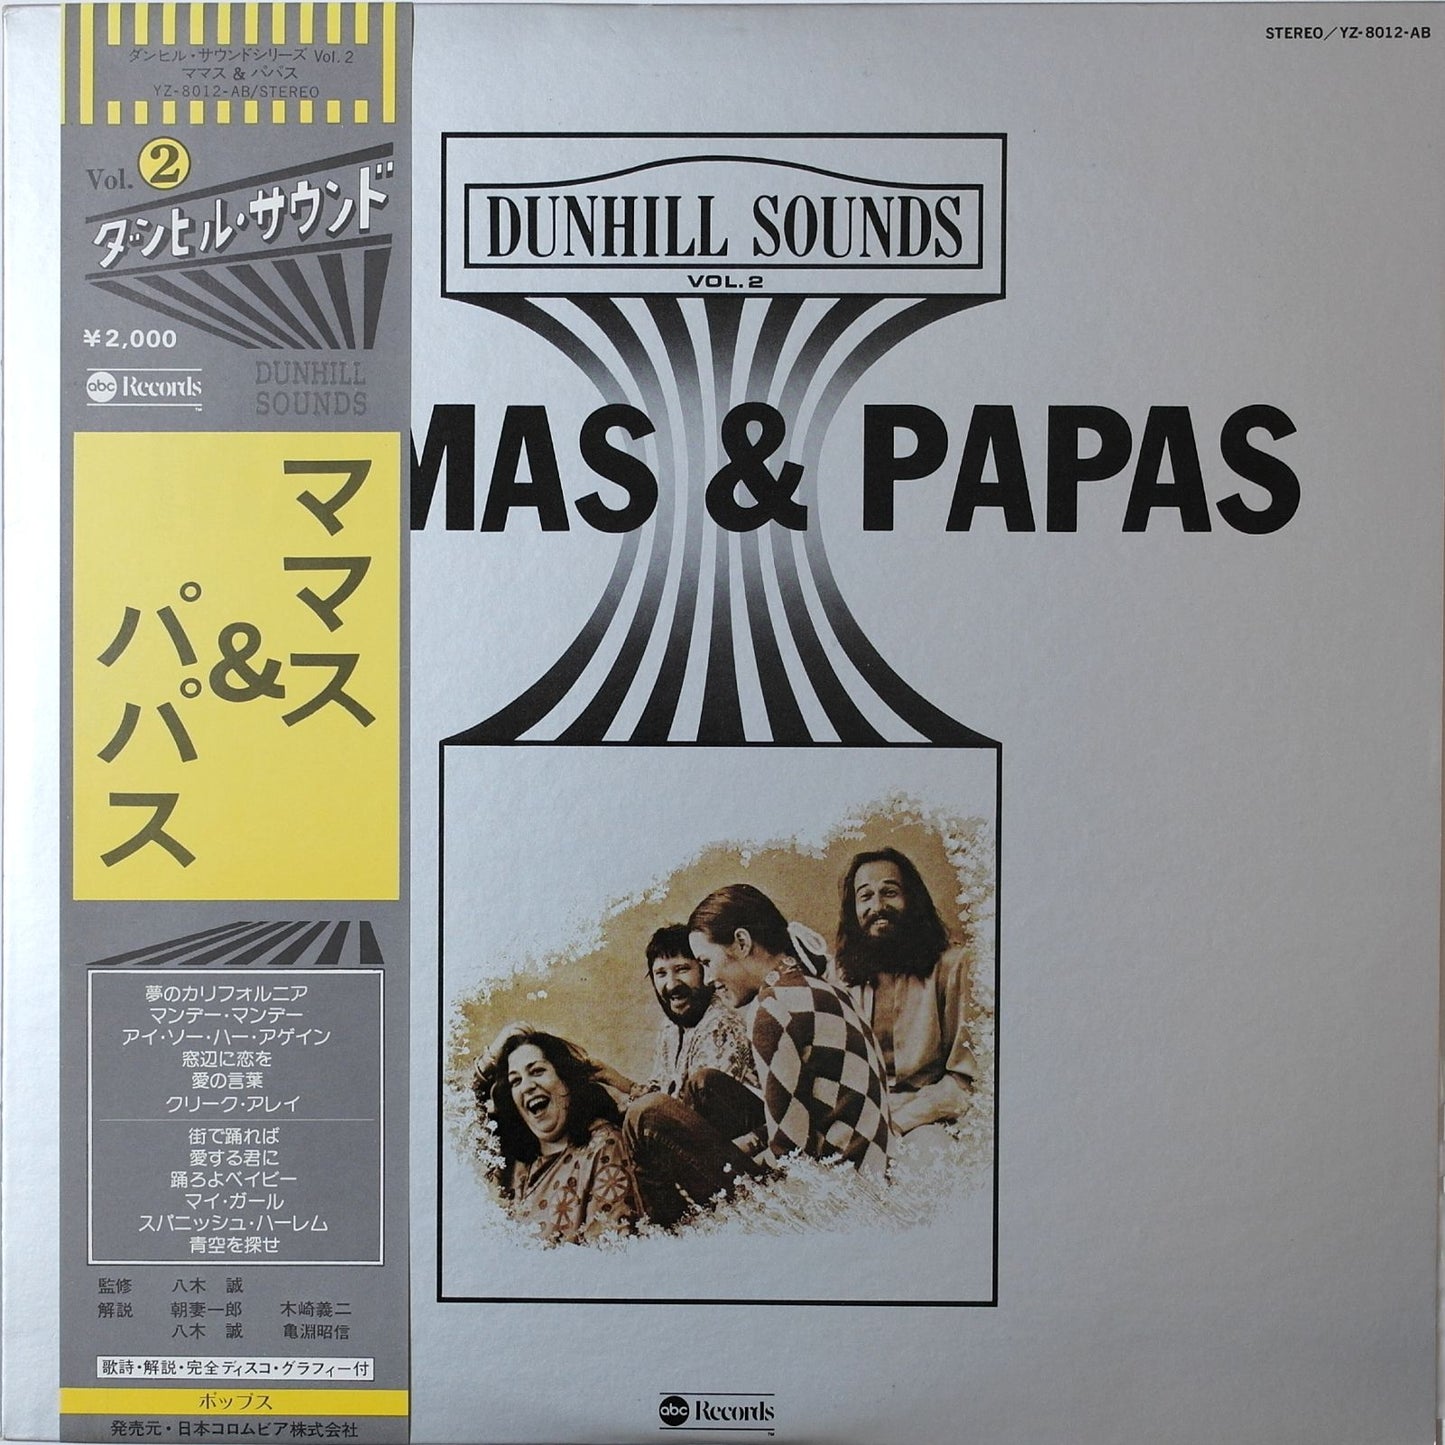 THE MAMAS & THE PAPAS - The Dunhill Sounds Vol.2